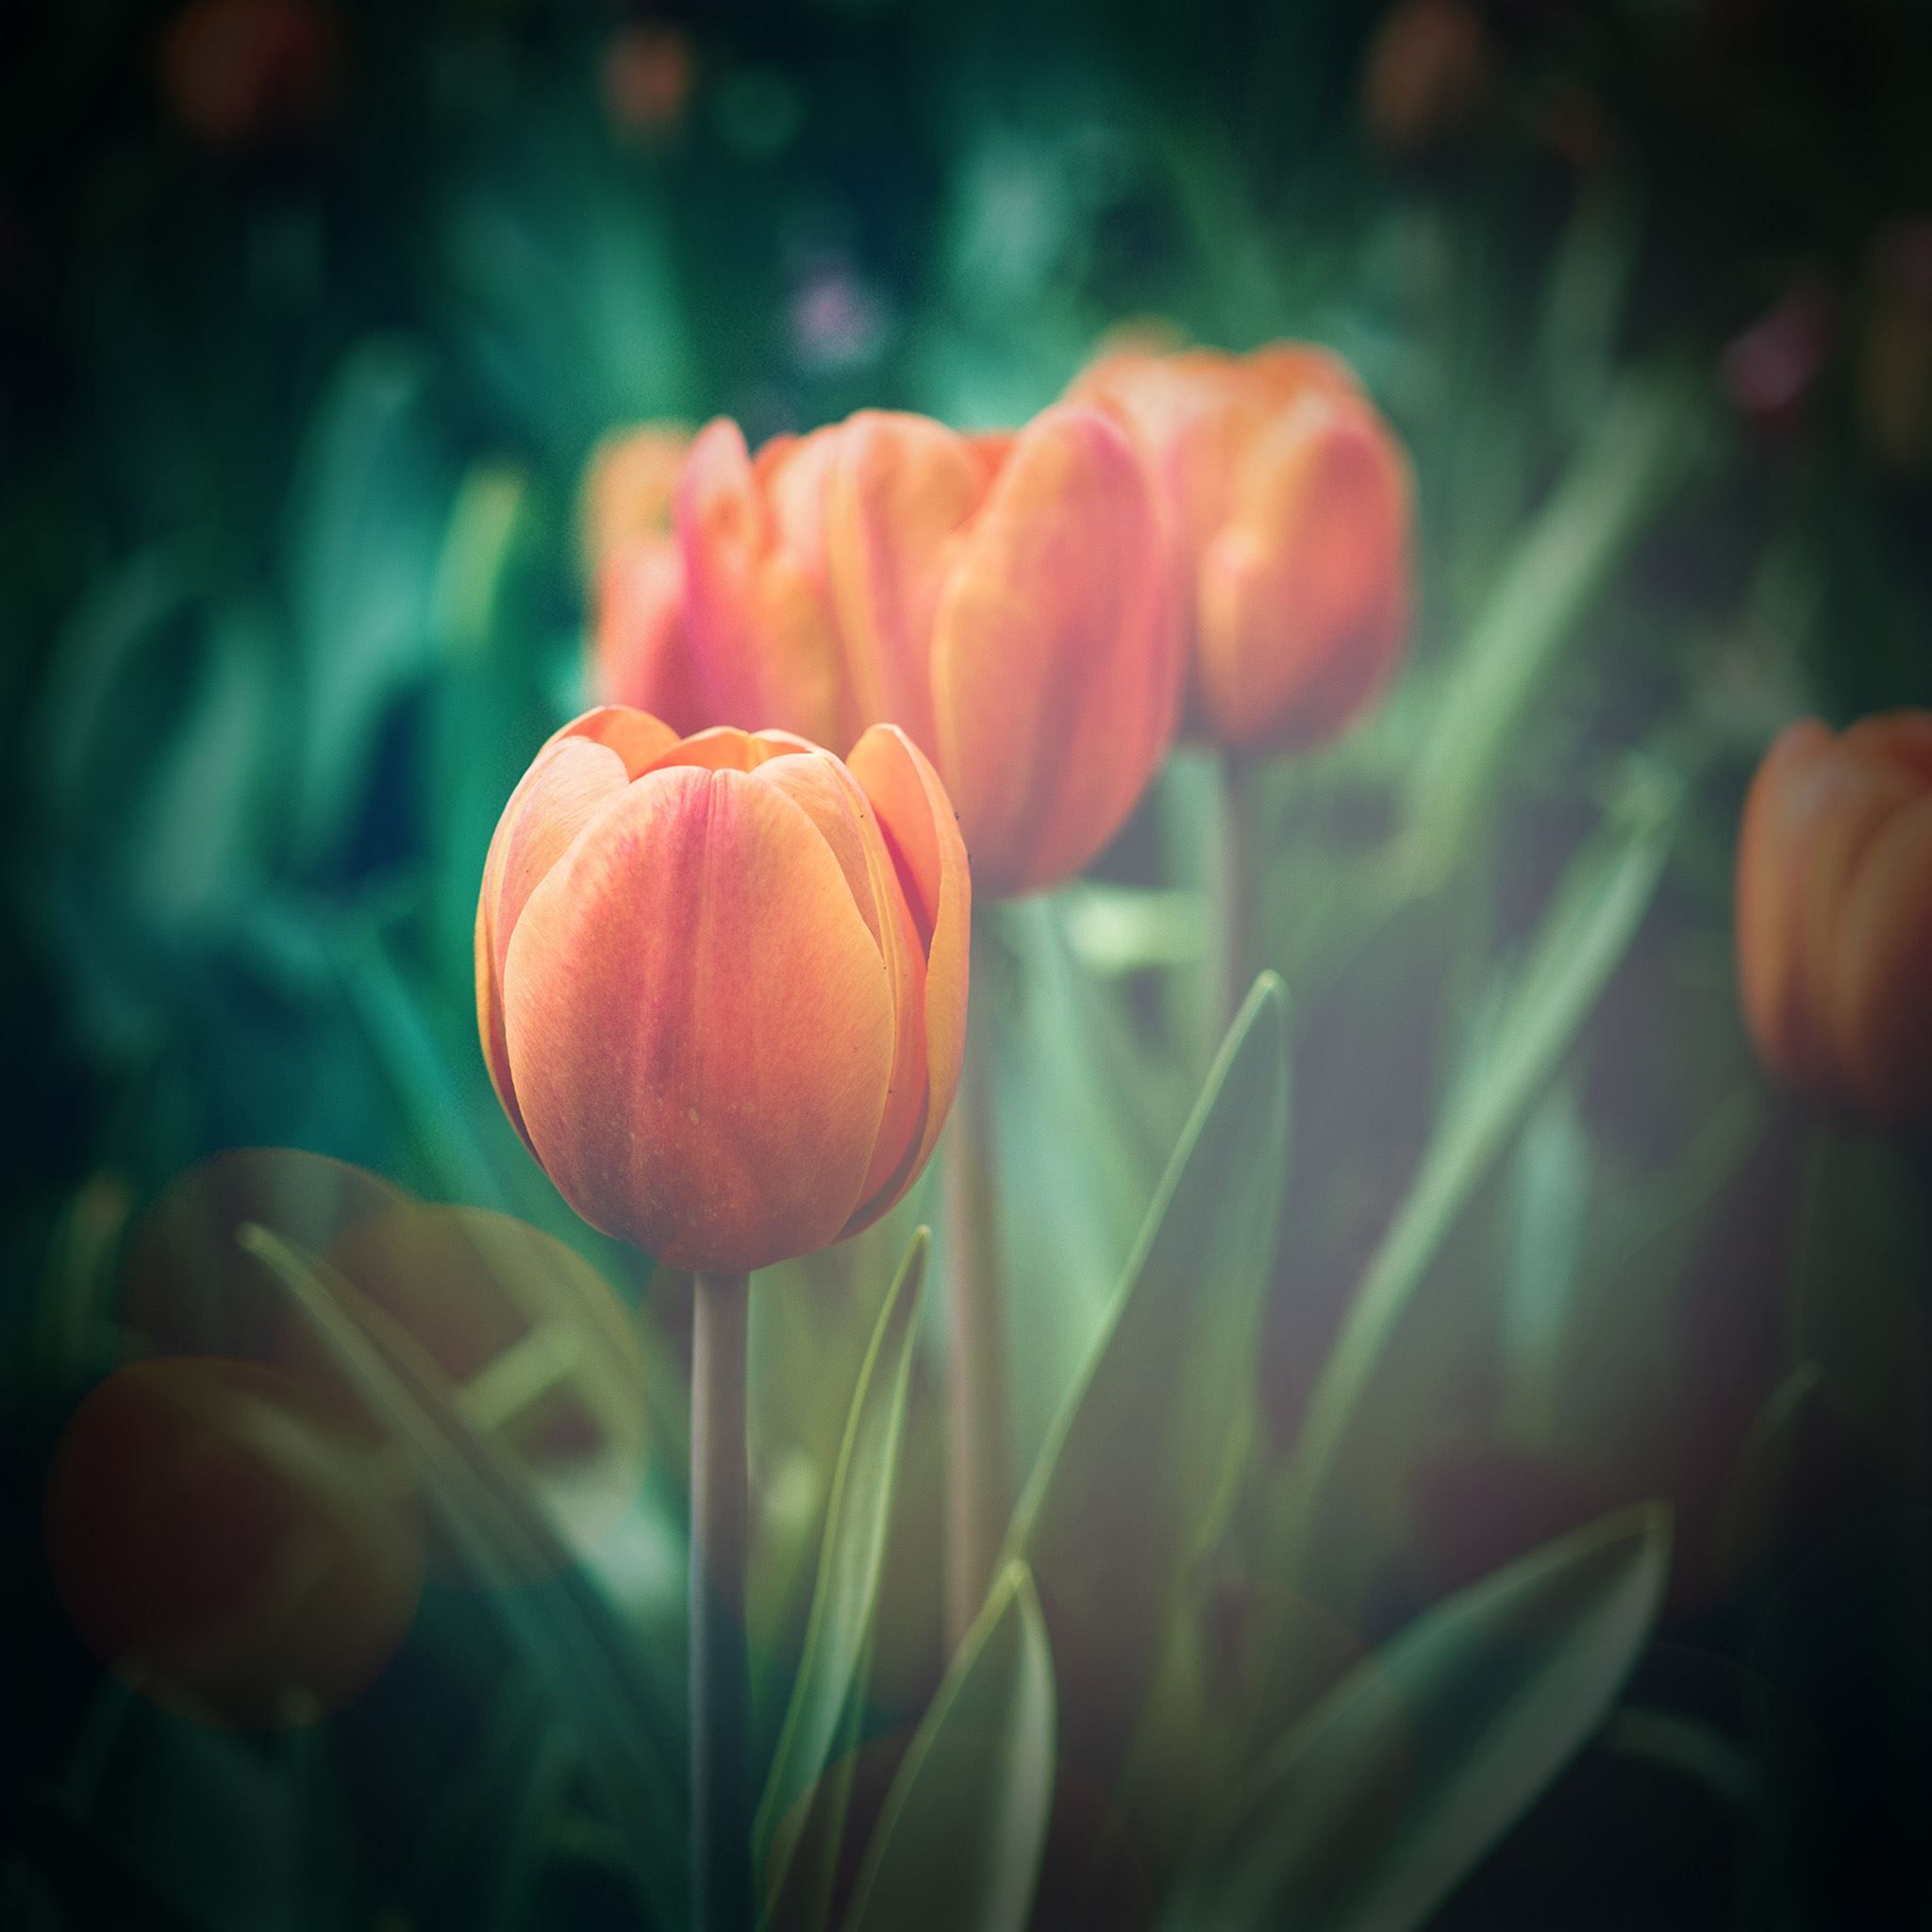 Flower Tulip Green Vignette Love Nature iPad Air Wallpaper Free Download